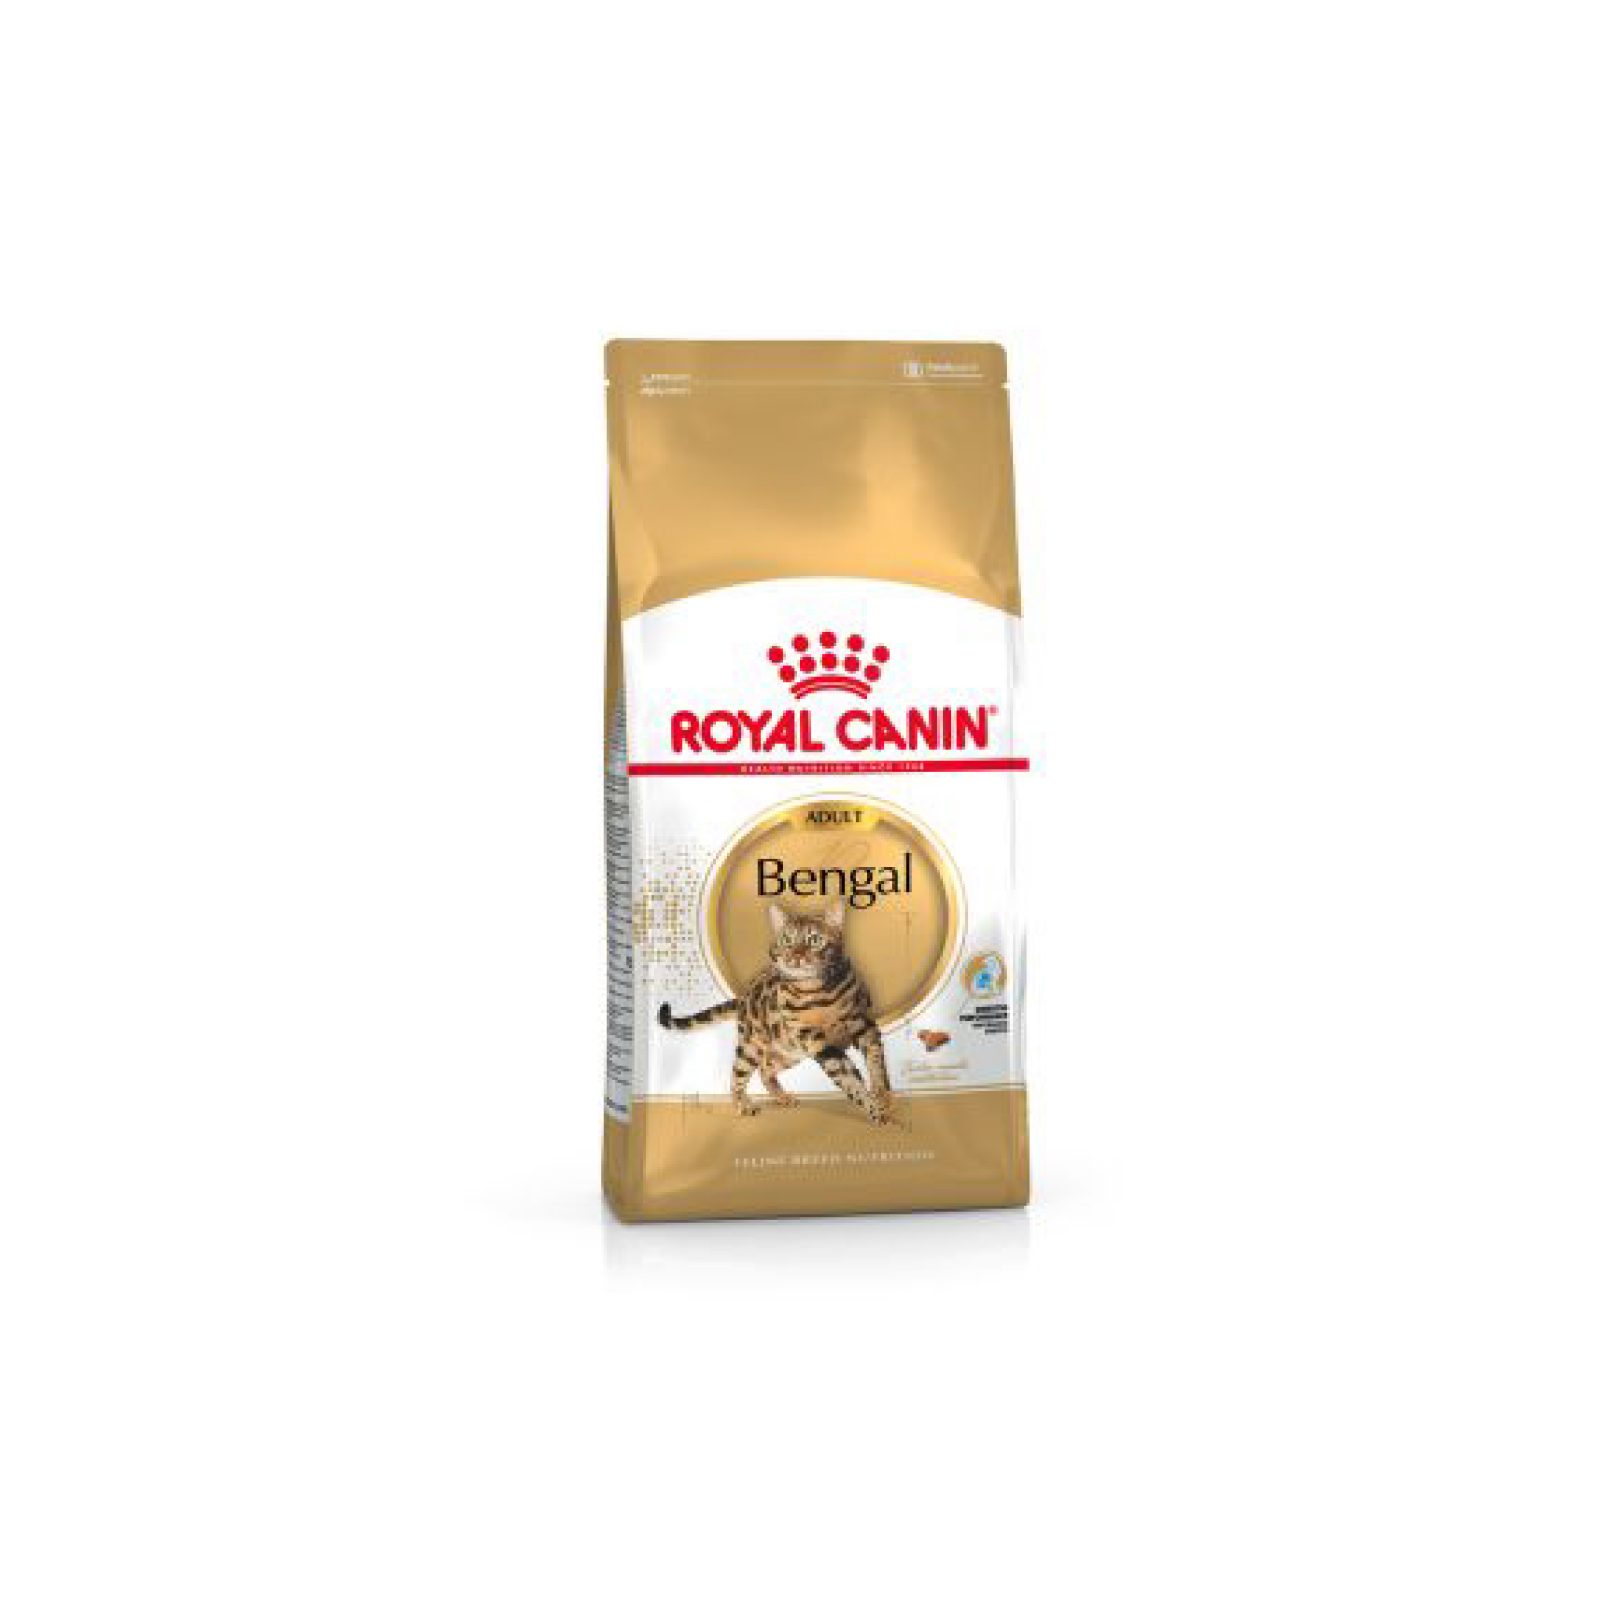 Royal Canin Bengal Cat Food Wicklow Pet Hotel